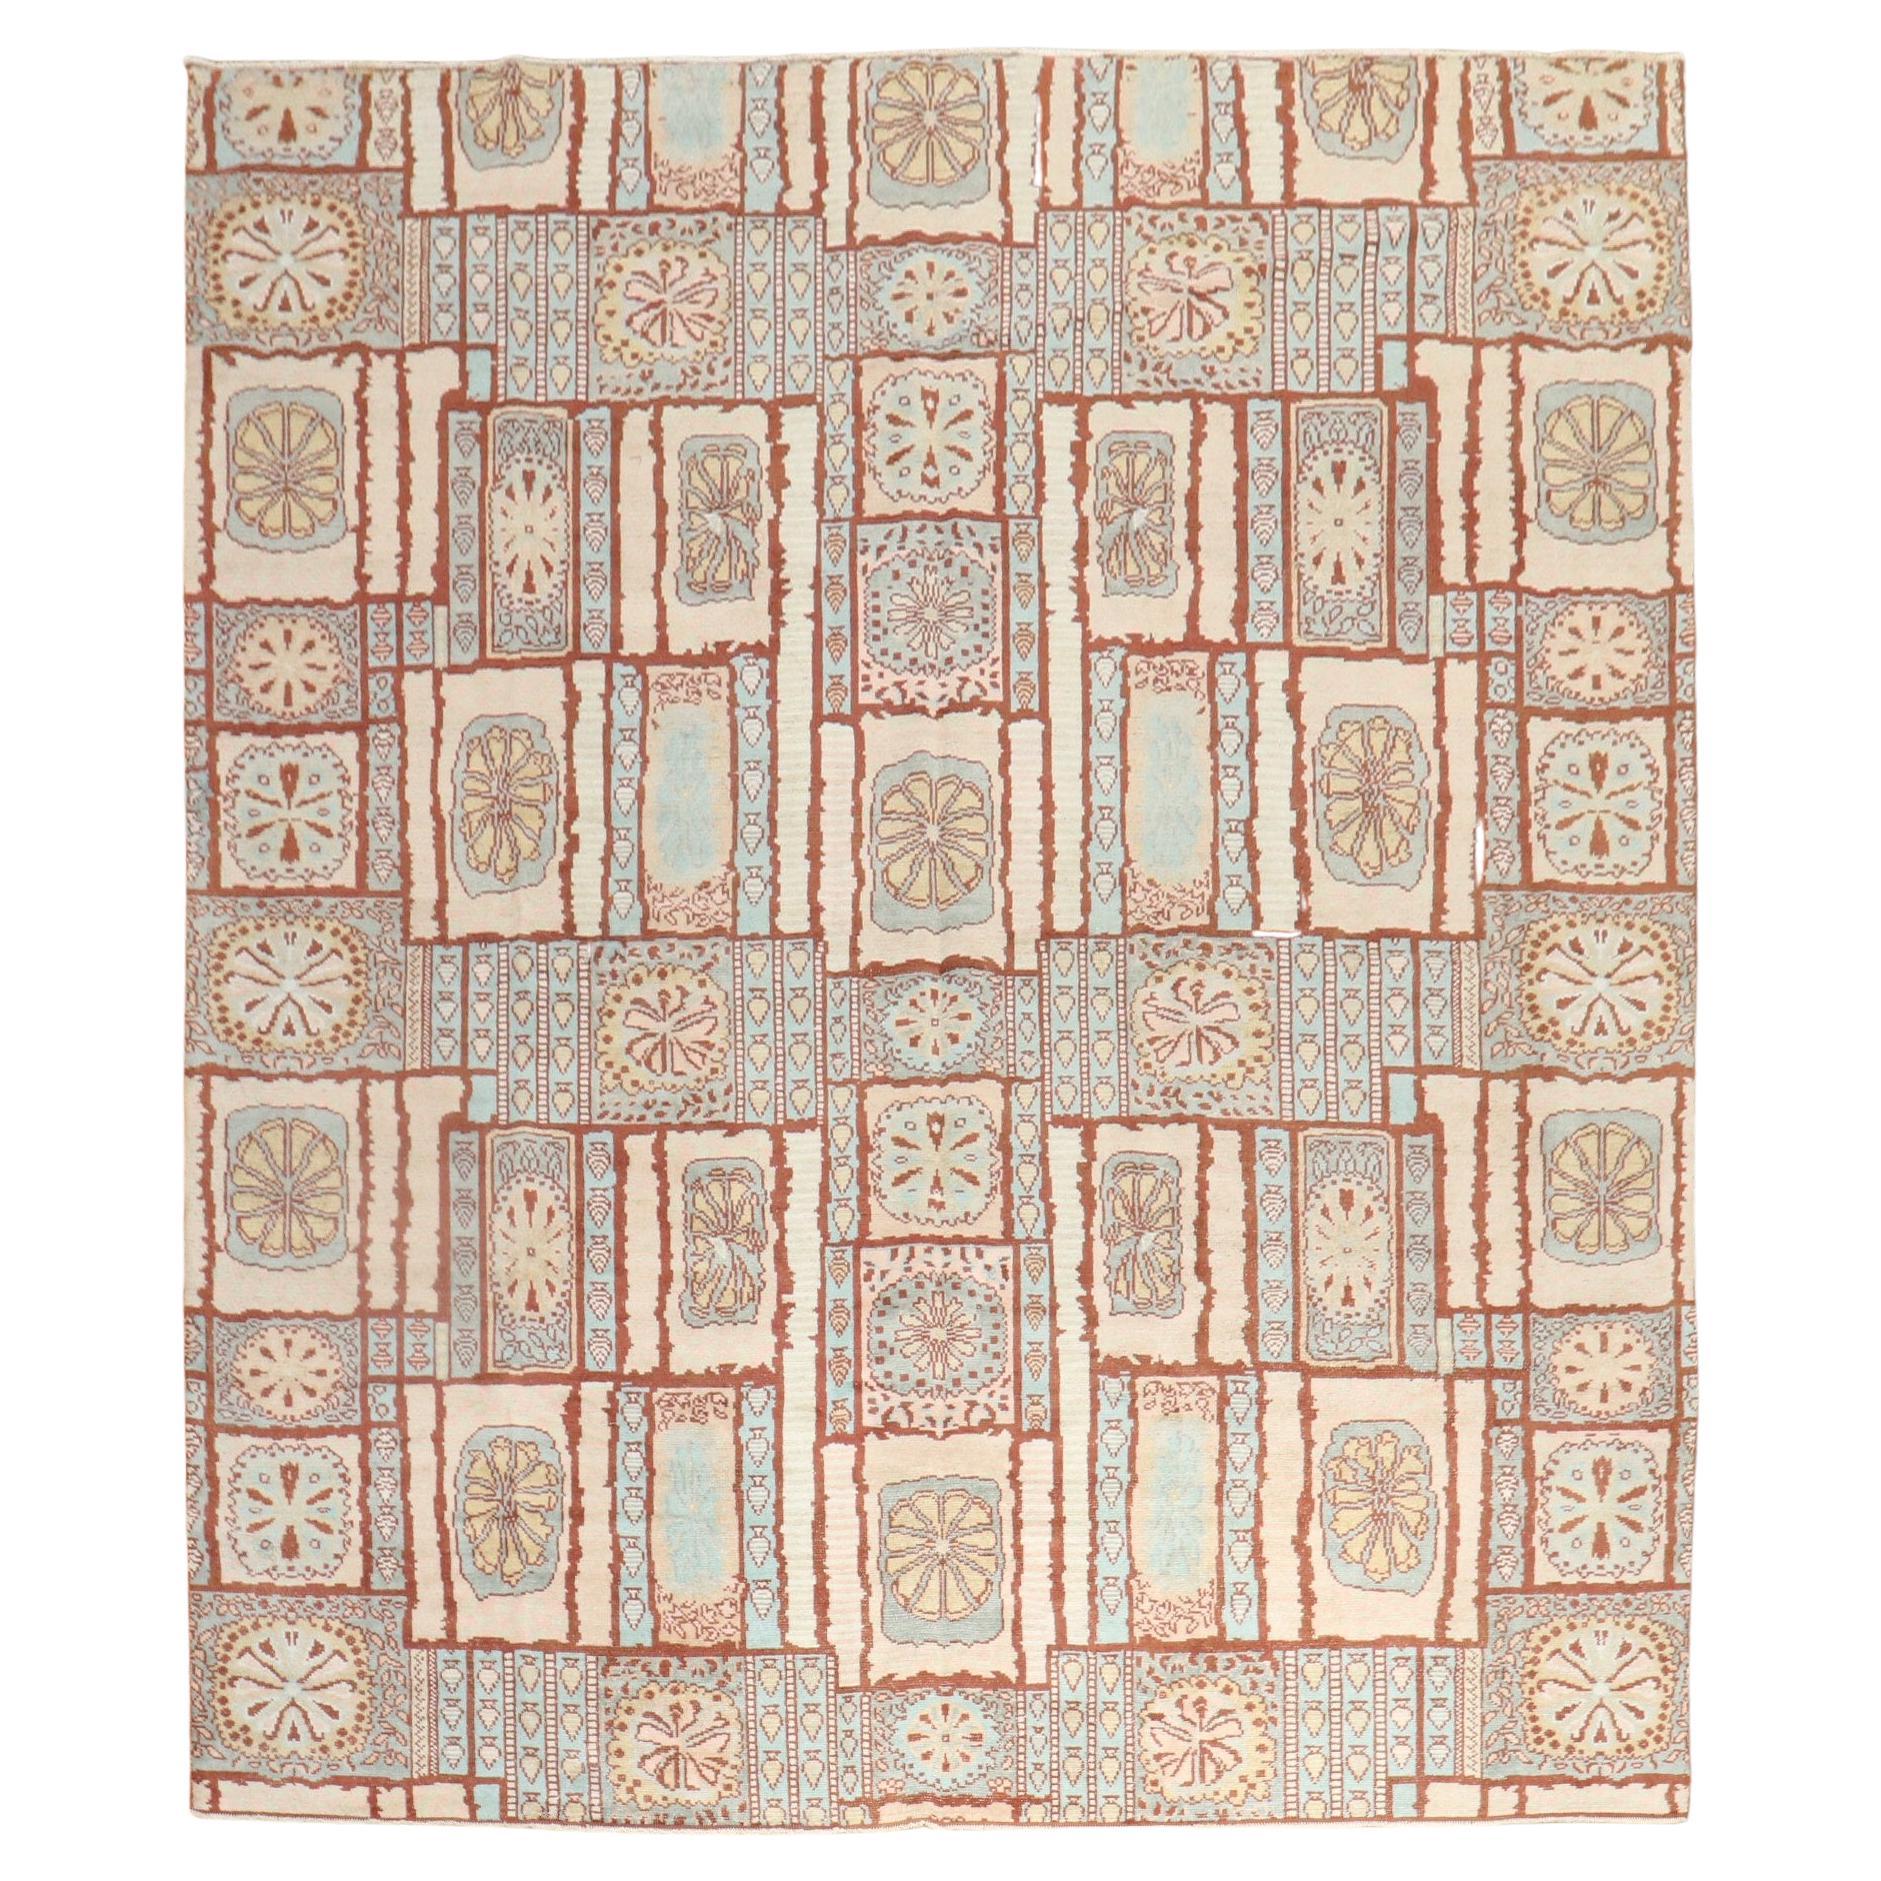 Zabihi Collection North African European Influenced Deco Carpet